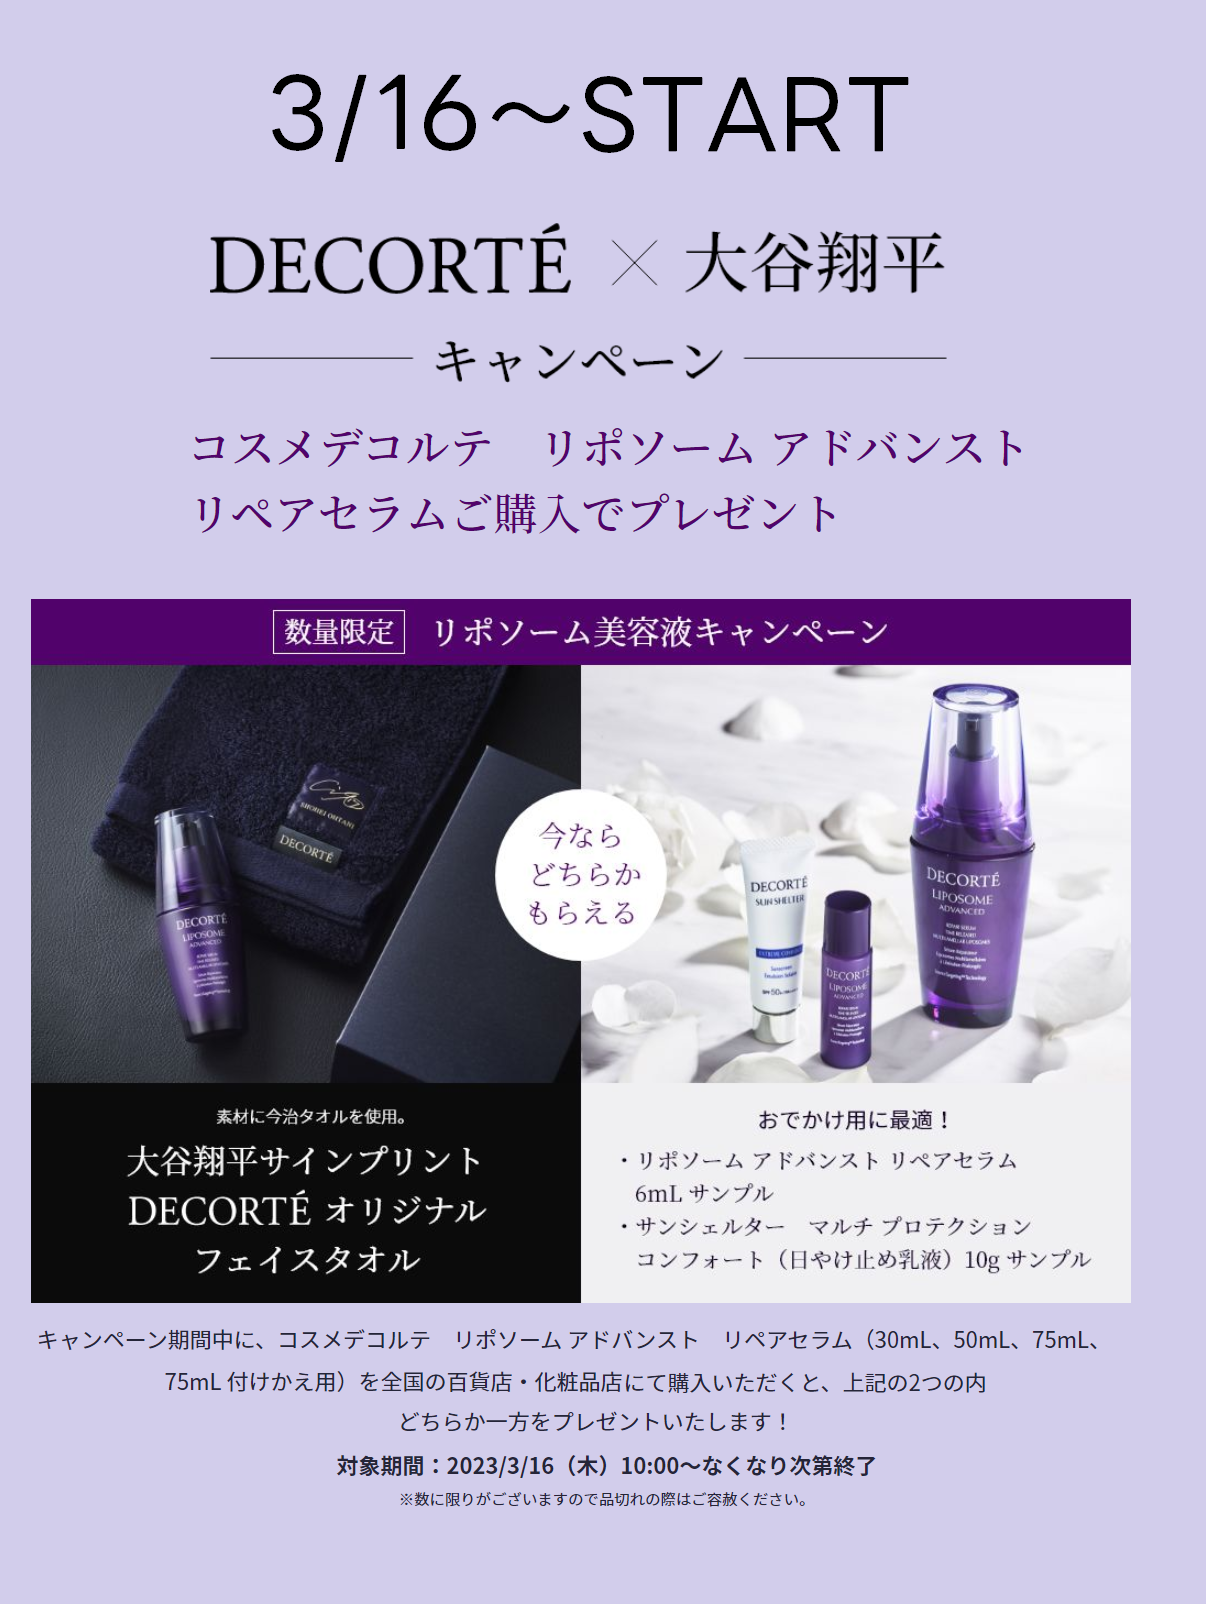 30%OFF SALE セール COSME DECORTE 大谷翔平タオルセット - 通販